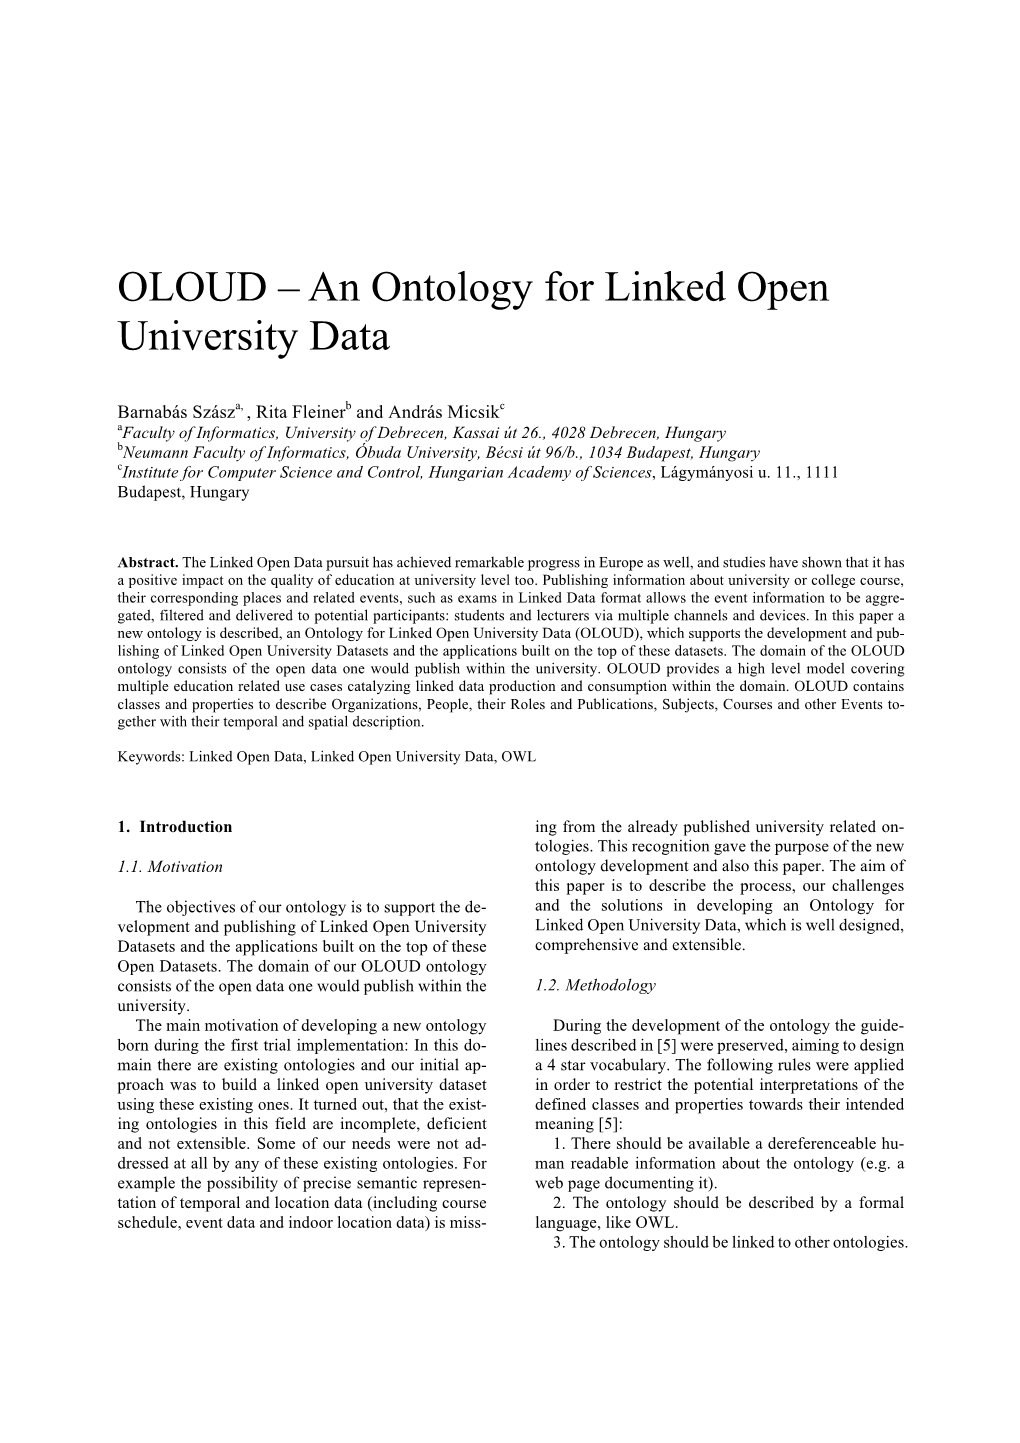 OLOUD – an Ontology for Linked Open University Data